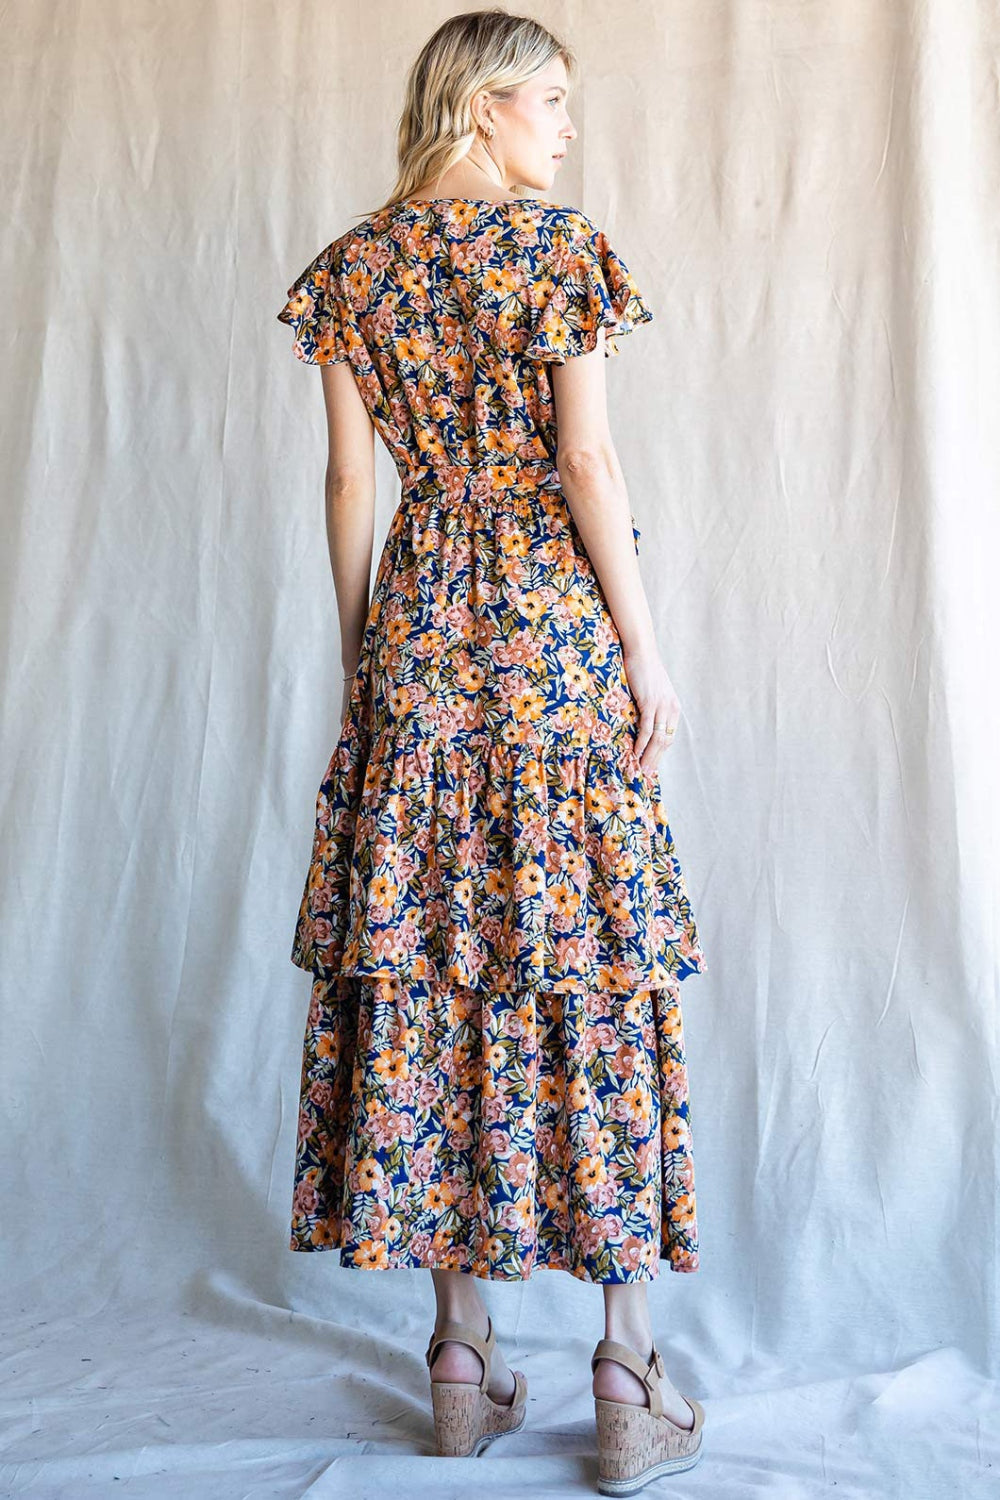 Floral Ruffled Midi Dress: Perfect Summer Beach Wedding Attire for Women